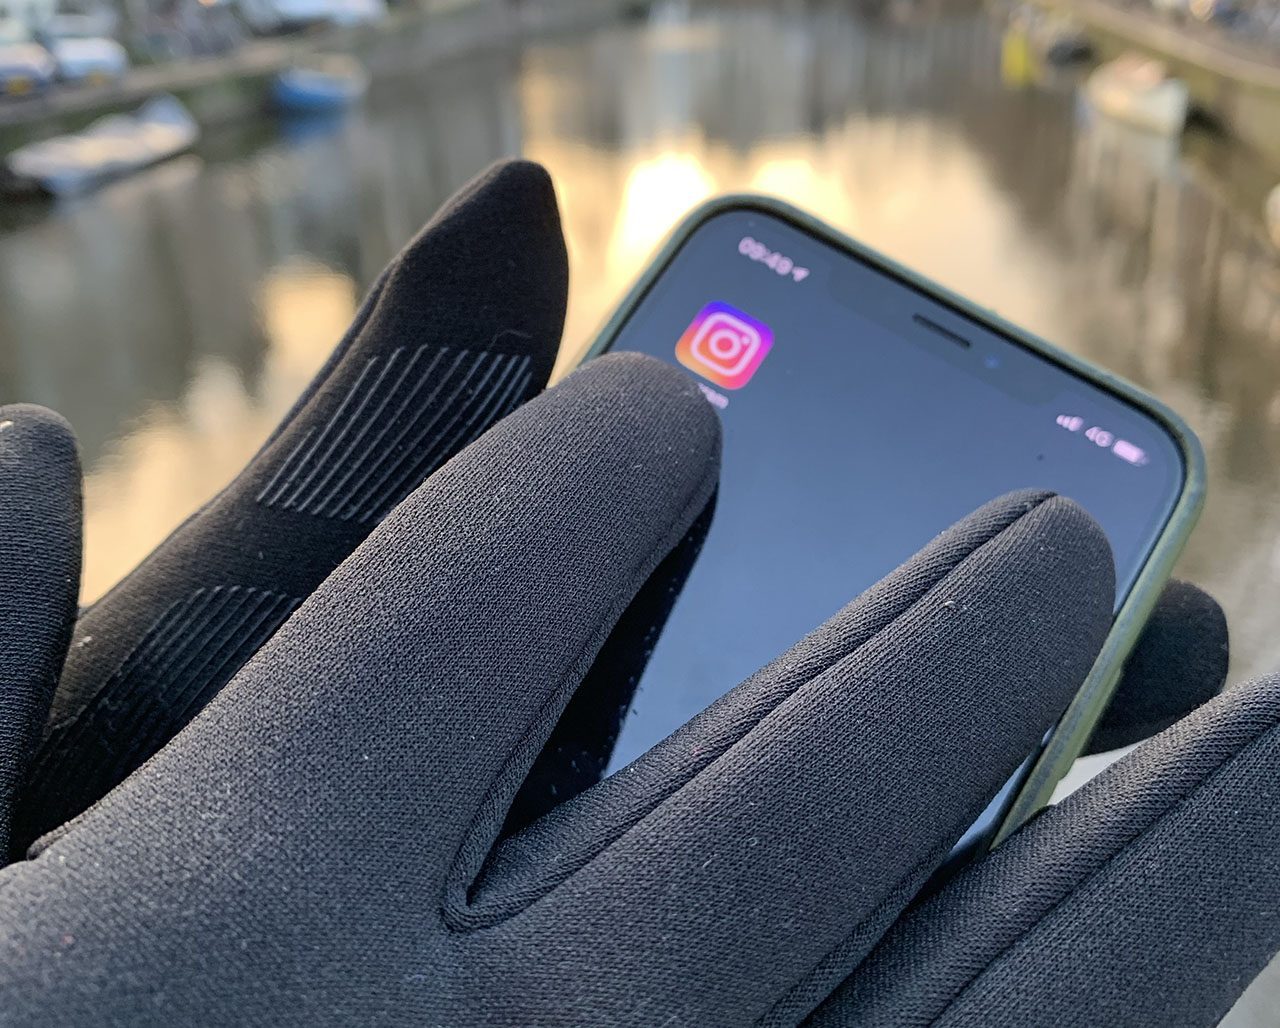 Mujjo Touchscreen Gloves in gebruik